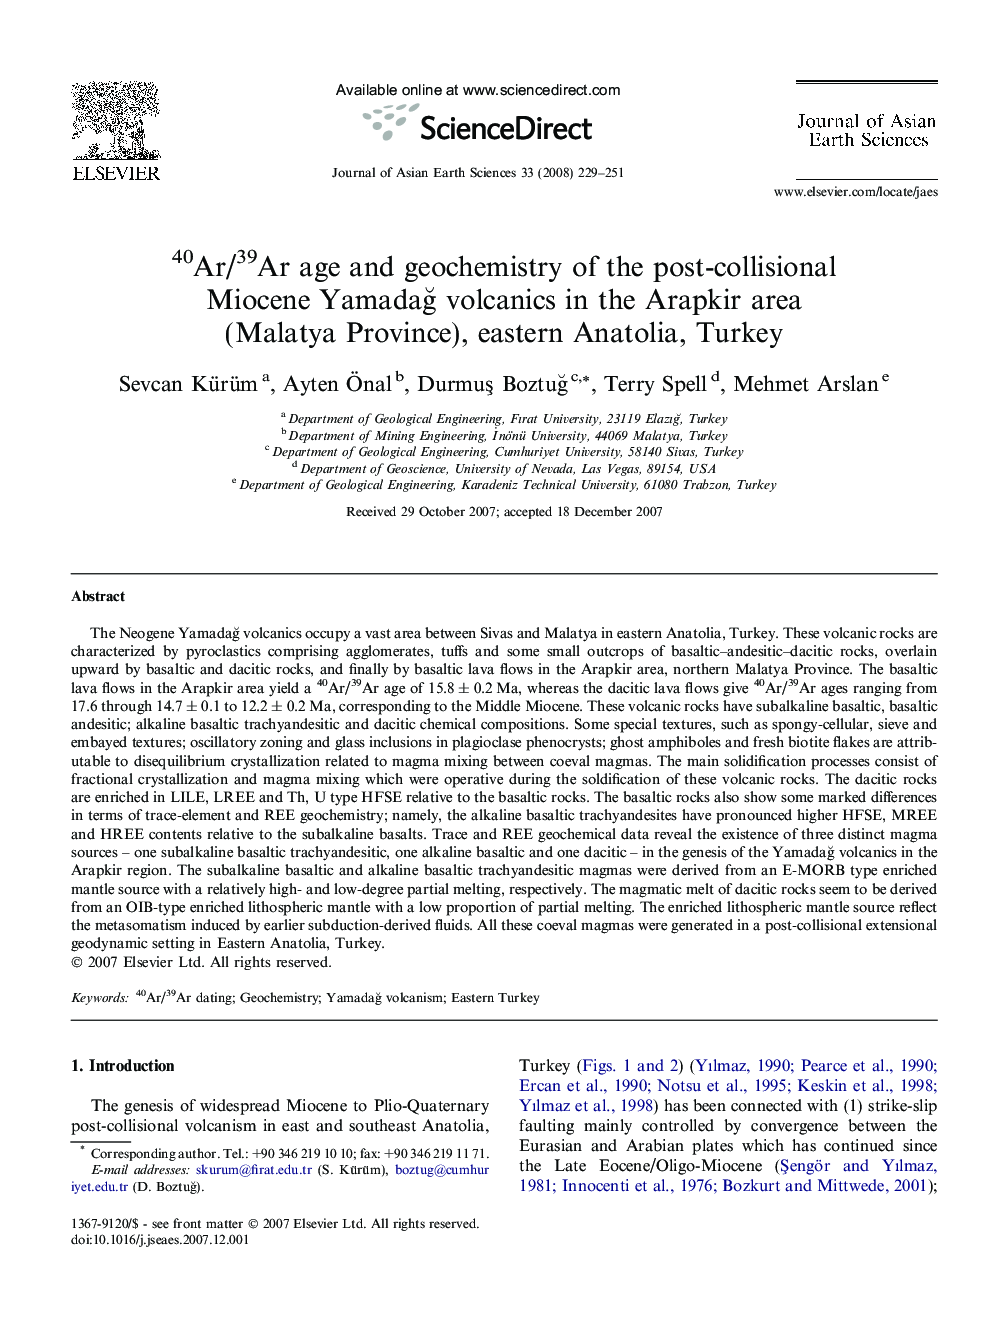 40Ar/39Ar age and geochemistry of the post-collisional Miocene Yamadağ volcanics in the Arapkir area (Malatya Province), eastern Anatolia, Turkey